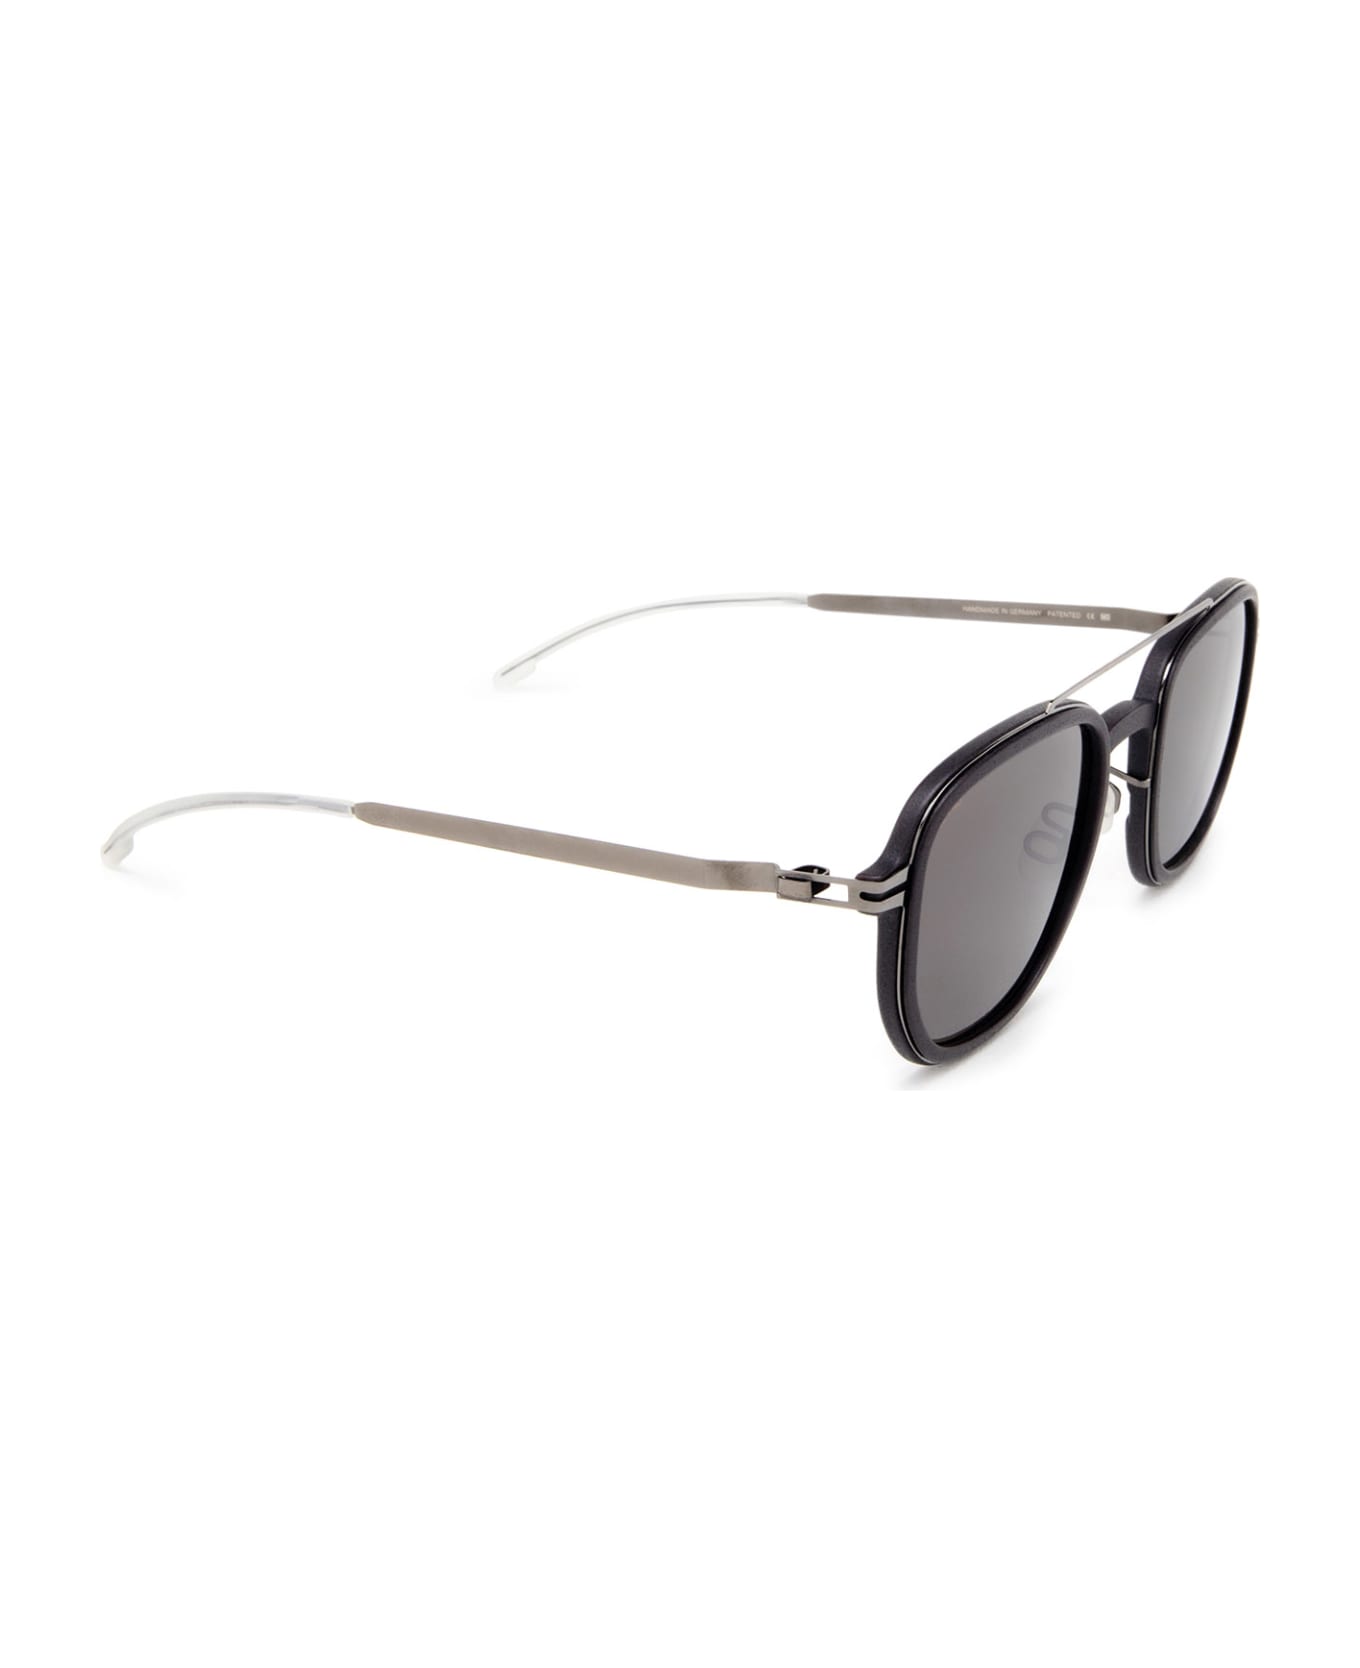 Mykita Alder Sun Mh60 Slate Grey/shiny Graphite Sunglasses - MH60 Slate Grey/Shiny Graphite サングラス